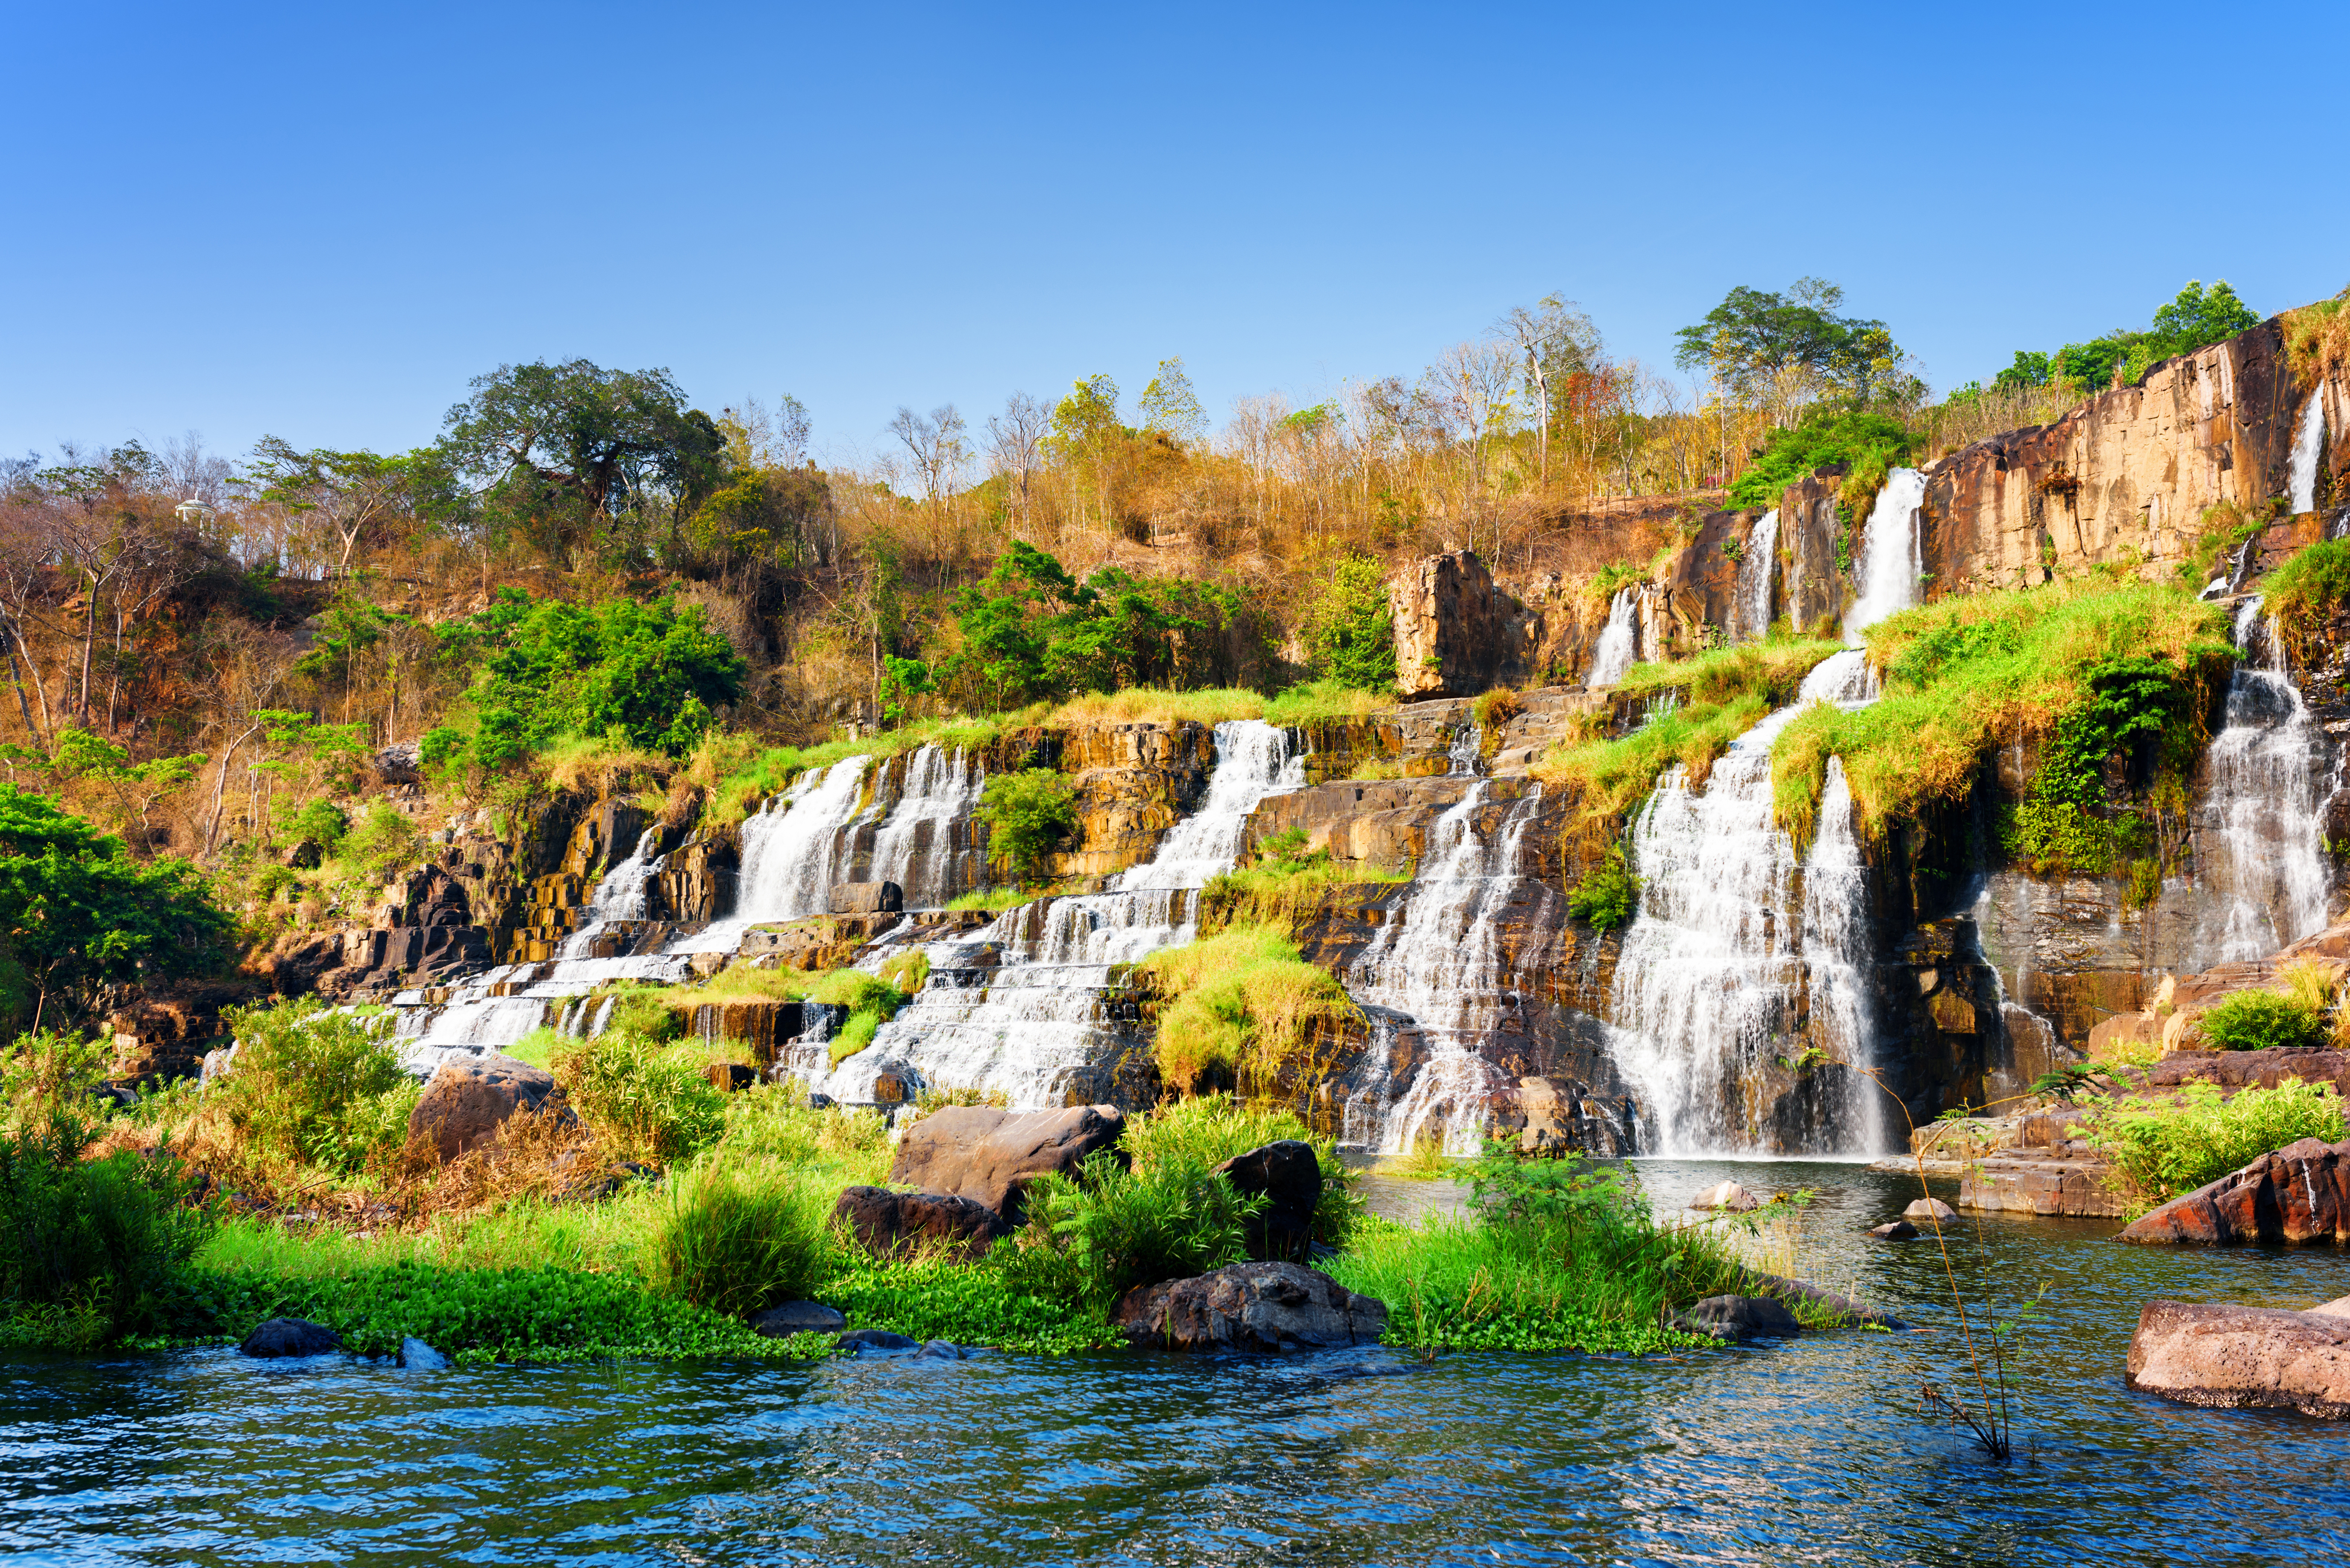 Pongour Waterfall in Vietnam